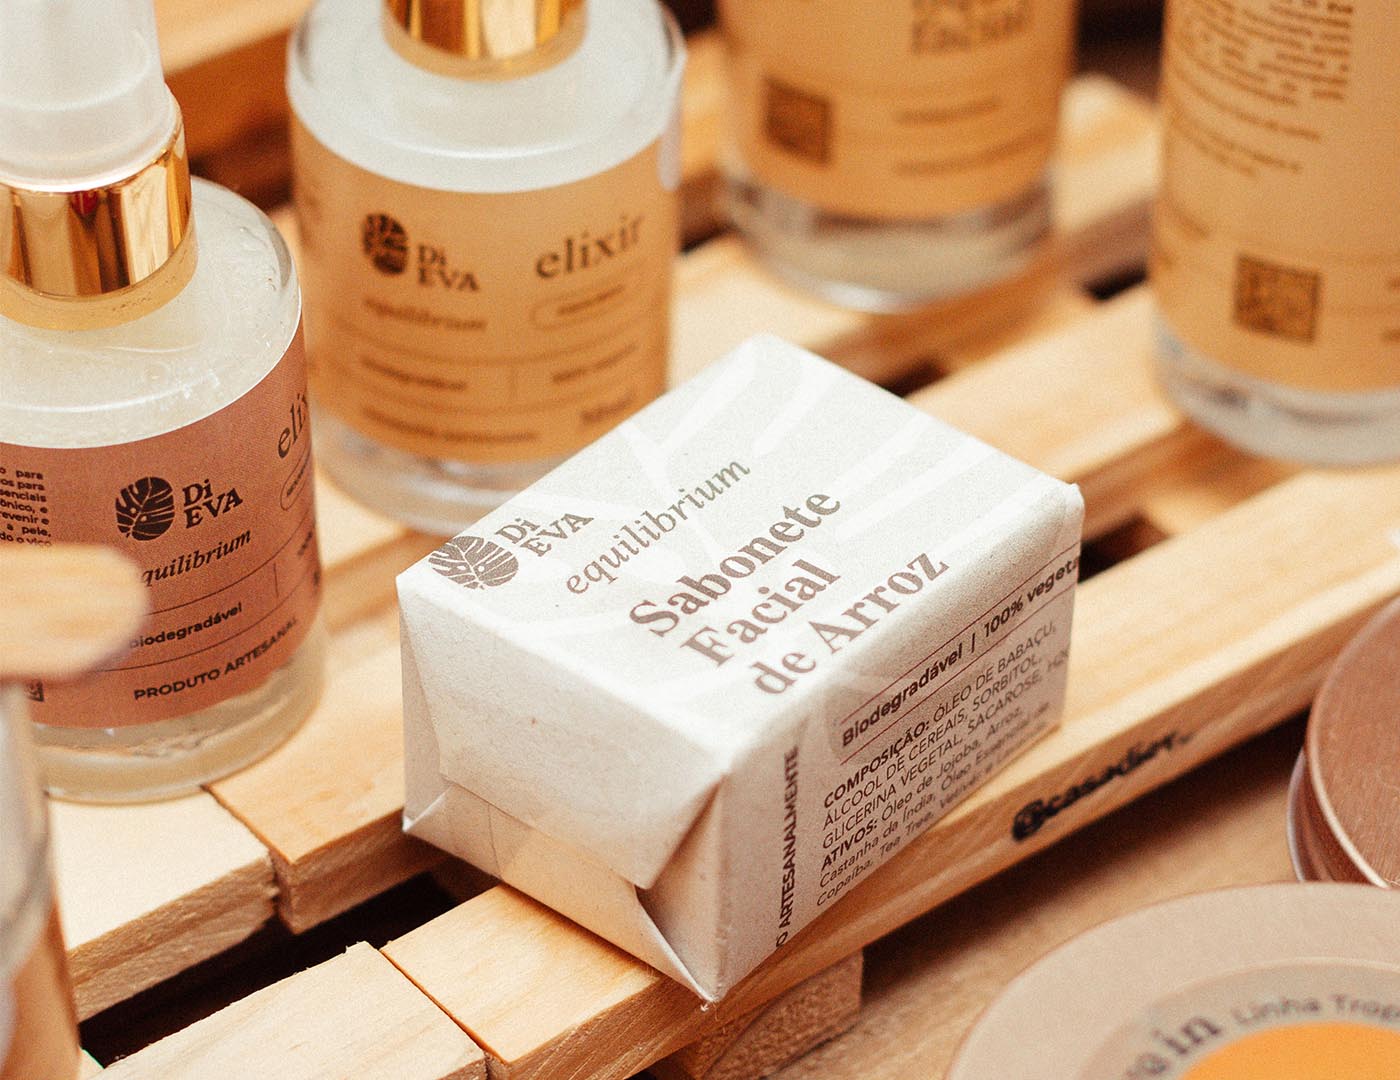 Casa di Eva Natural Beauty Brand and Packaging Design